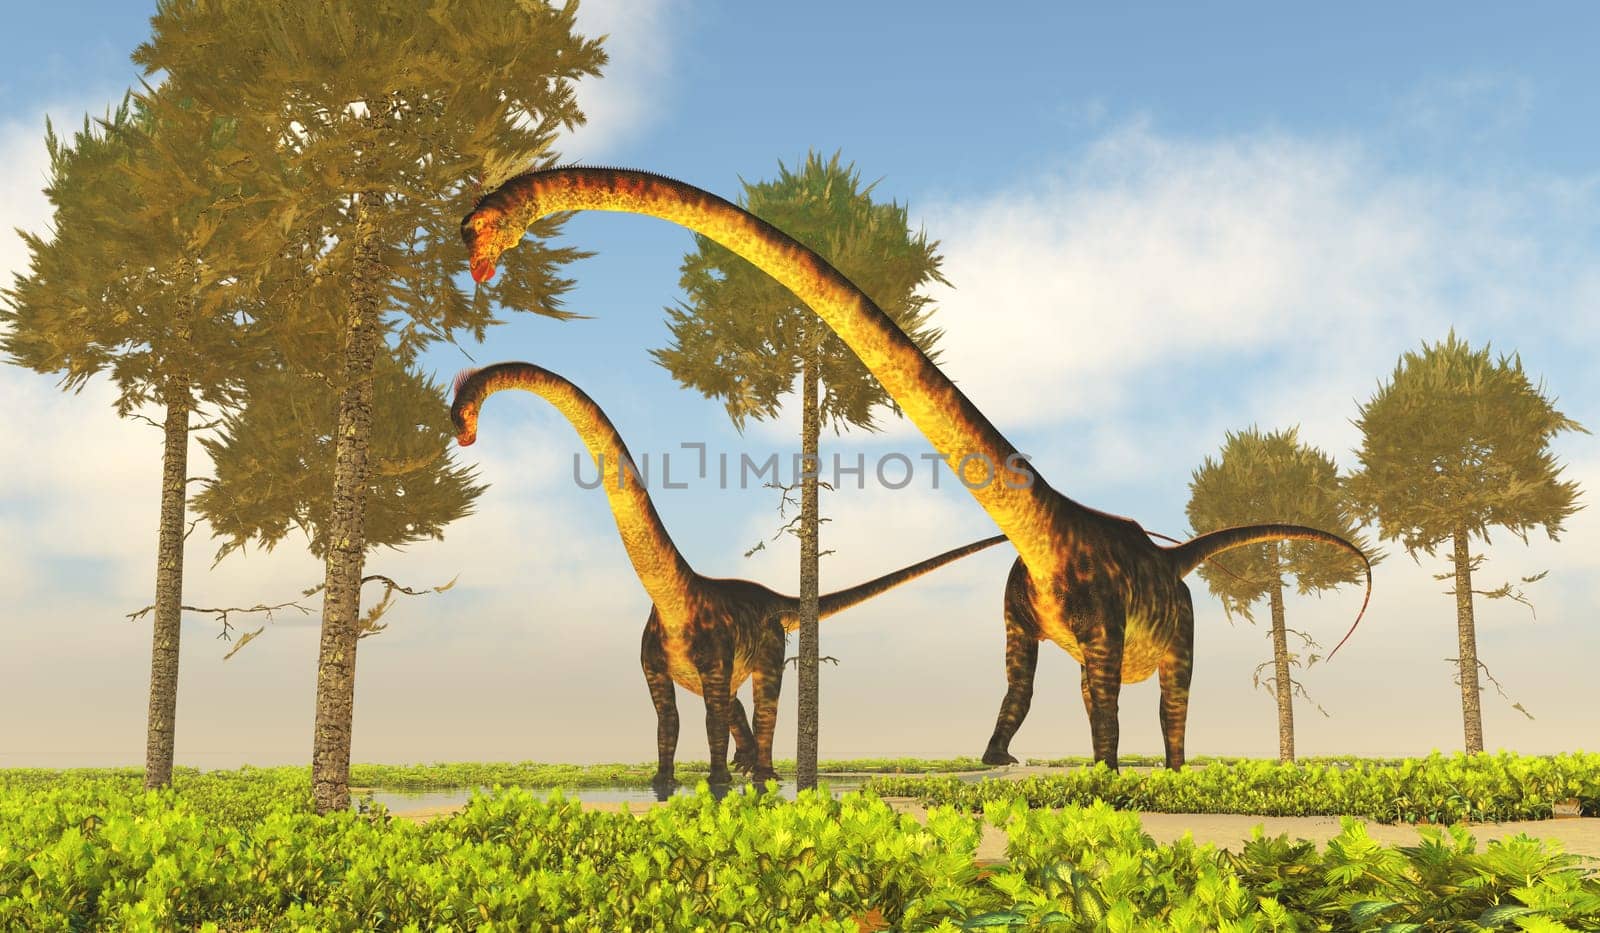 Barosaurus Dinosaurs Eating Foliage by Catmando